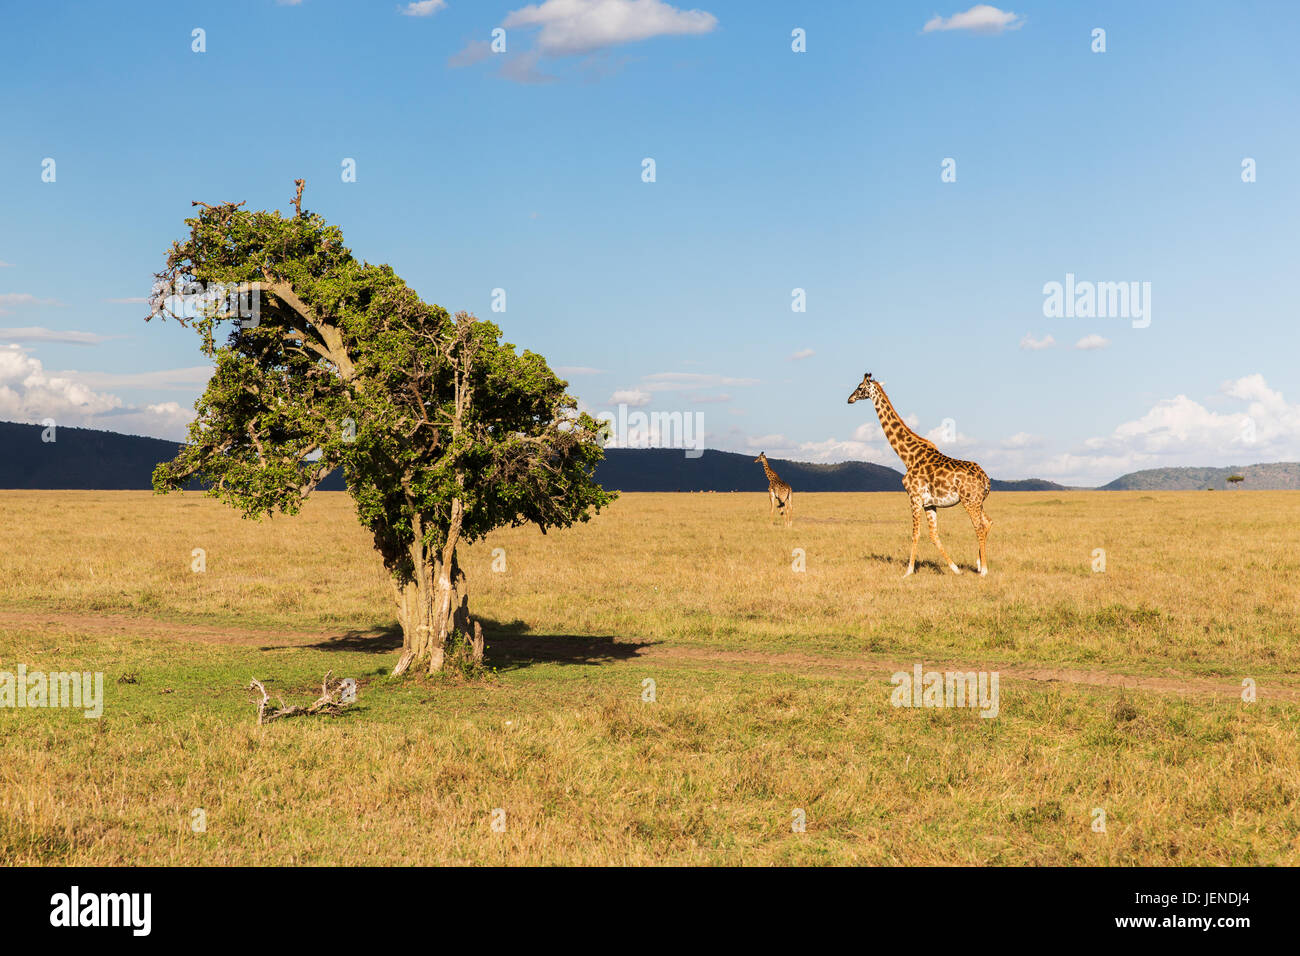 giraffes in savannah at africa Stock Photo